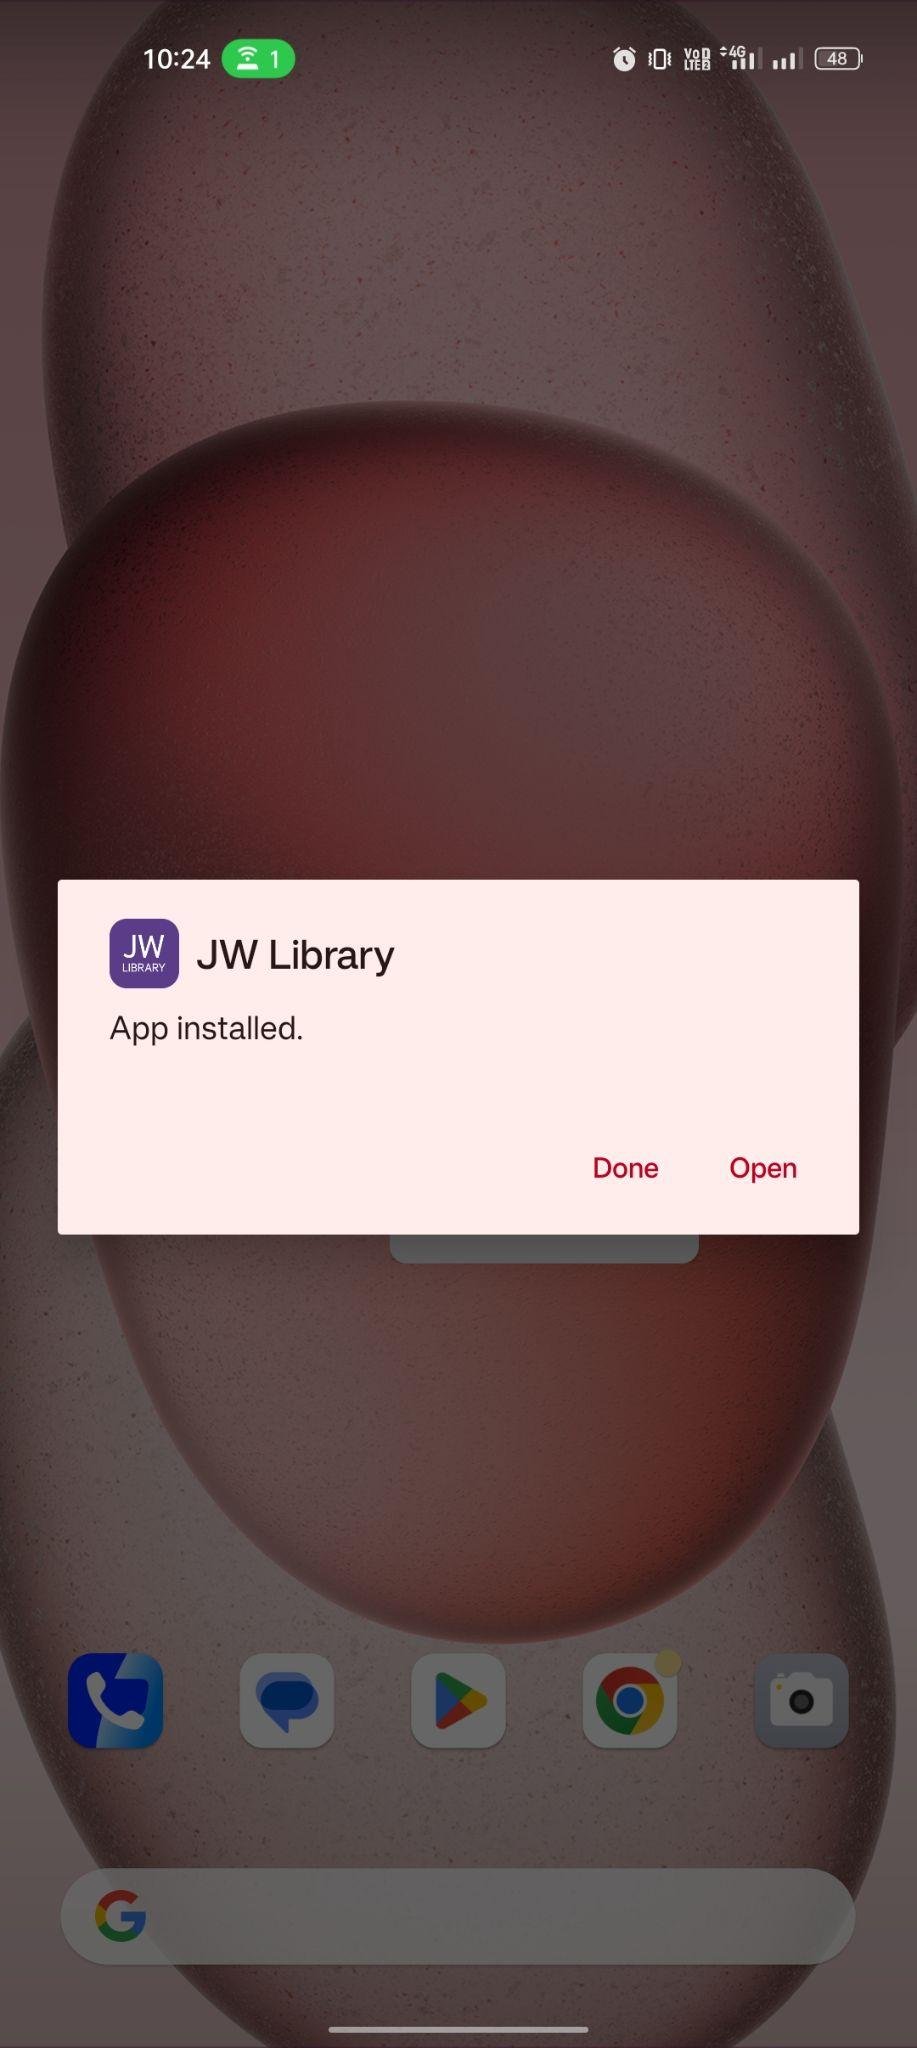 JW Library apk installed